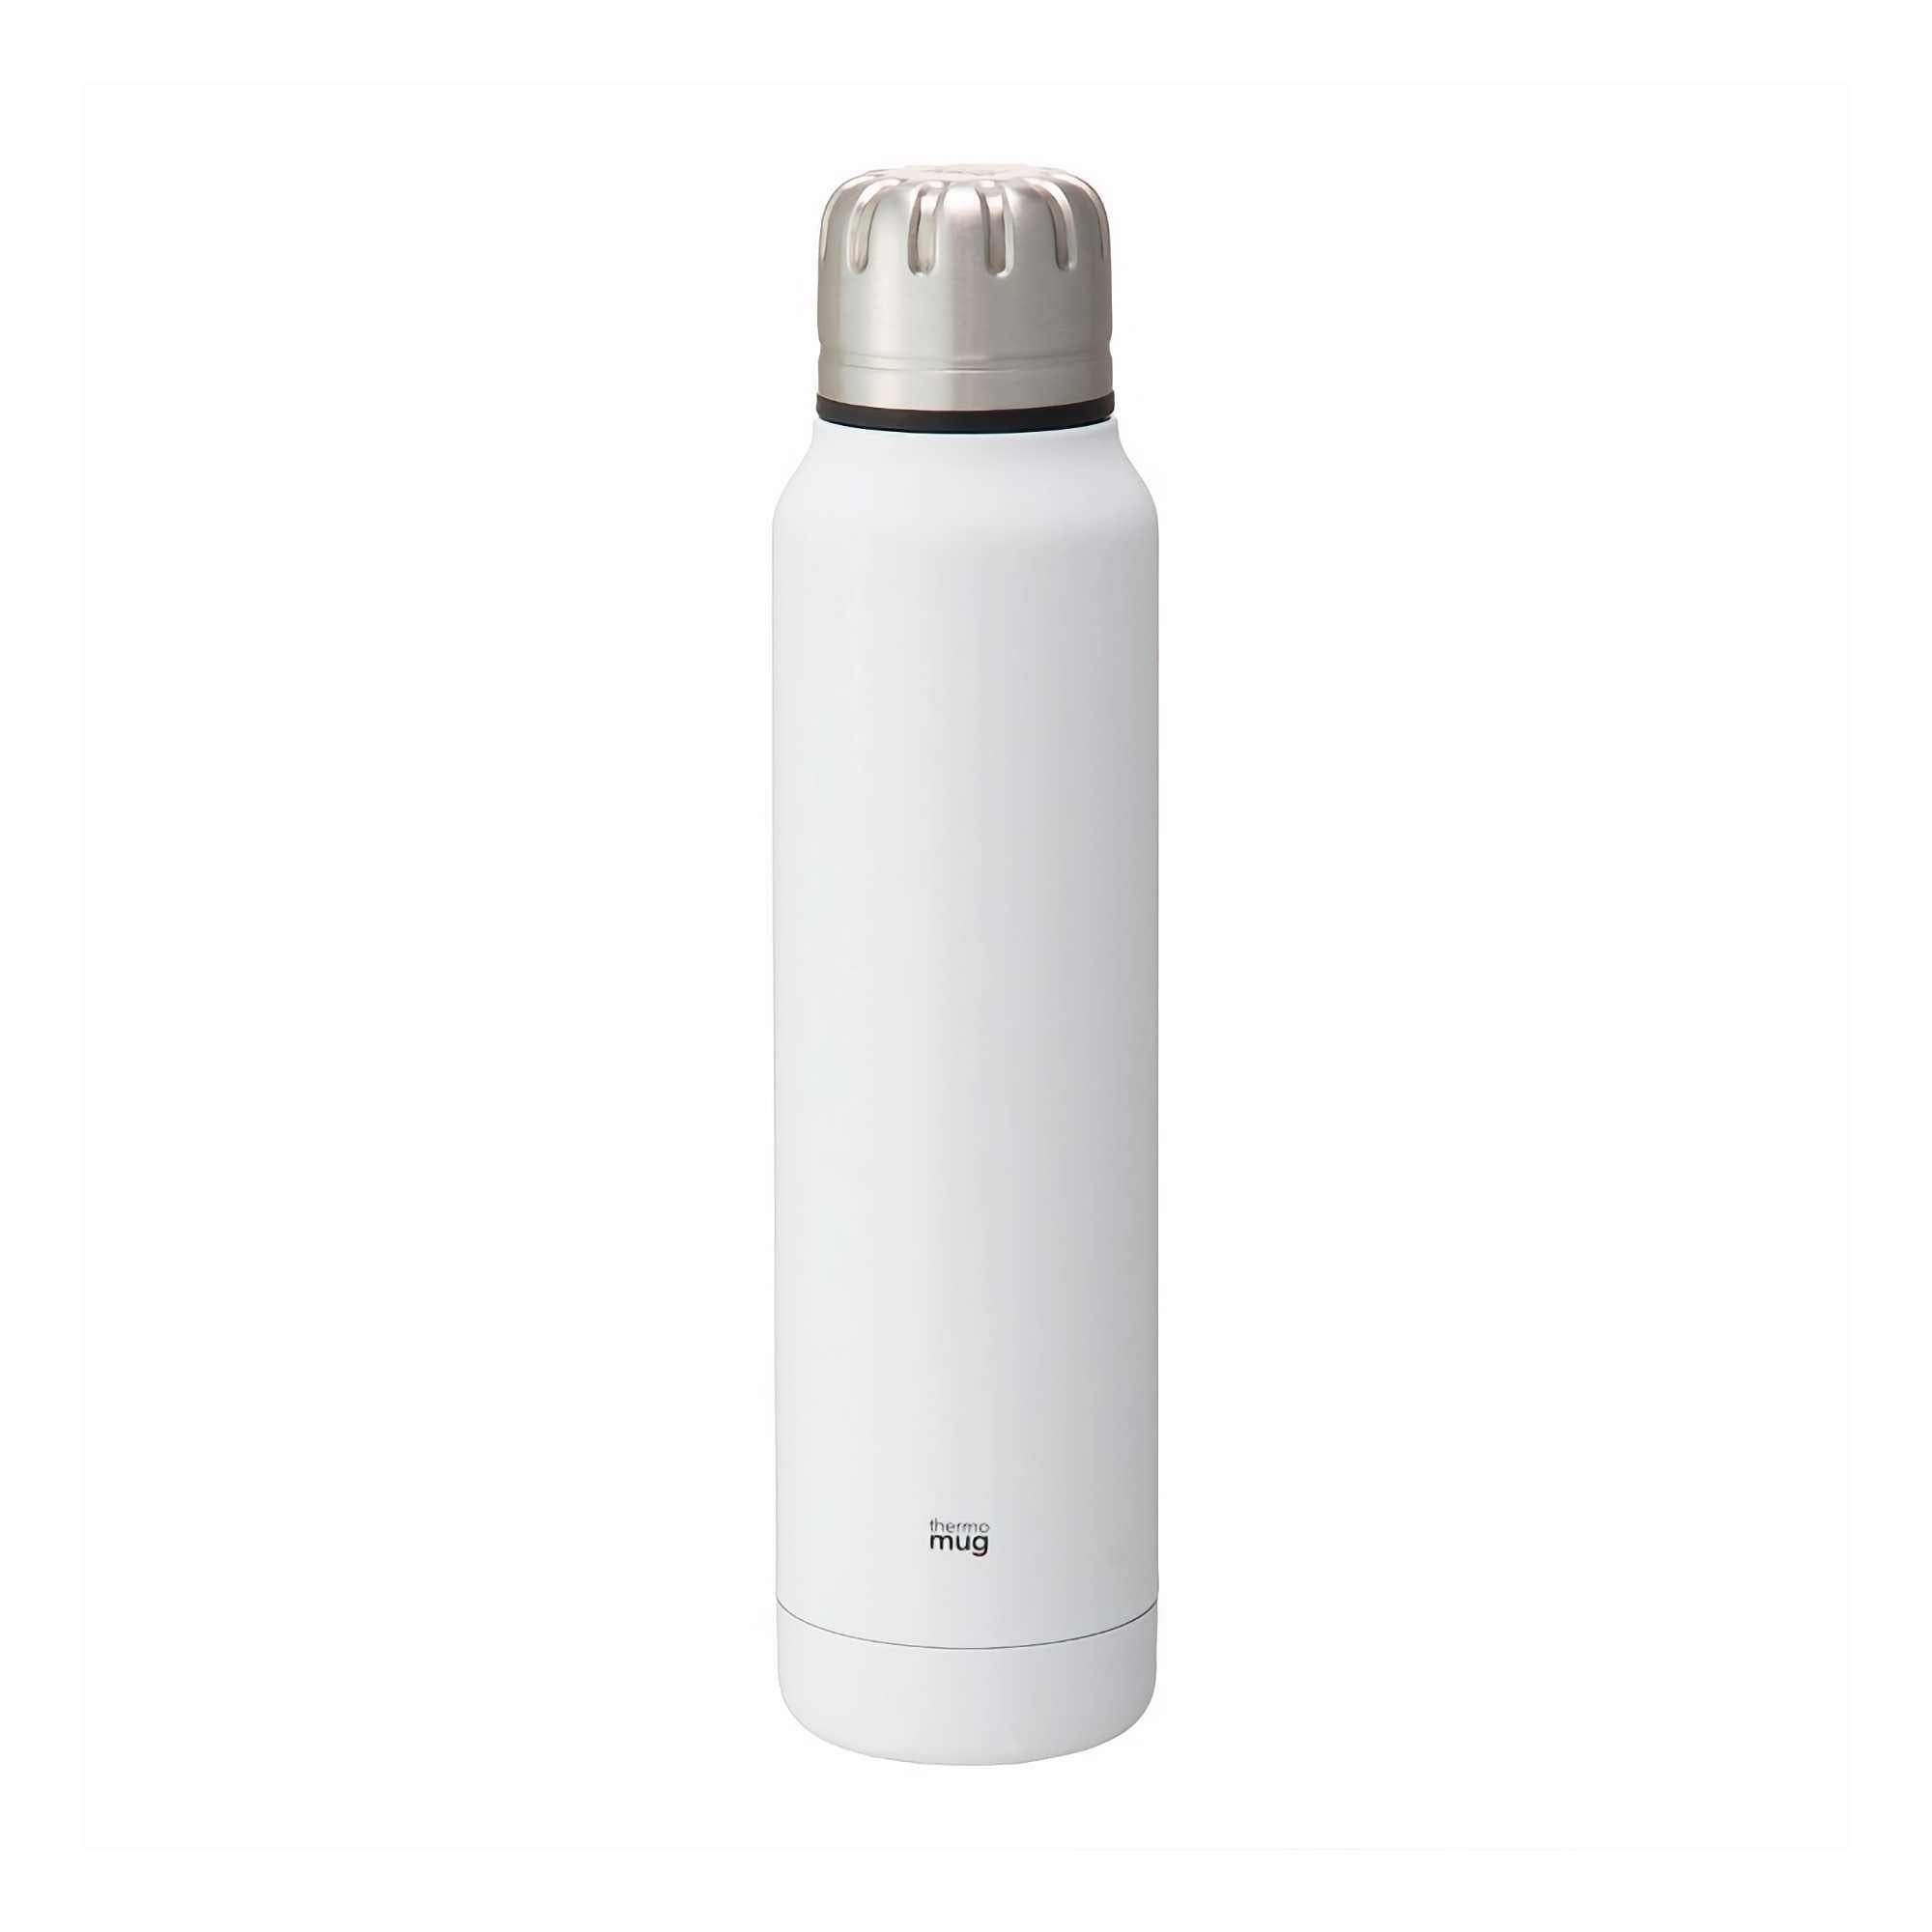 Thermo Mug Umbrella bottle, white (300 ml)